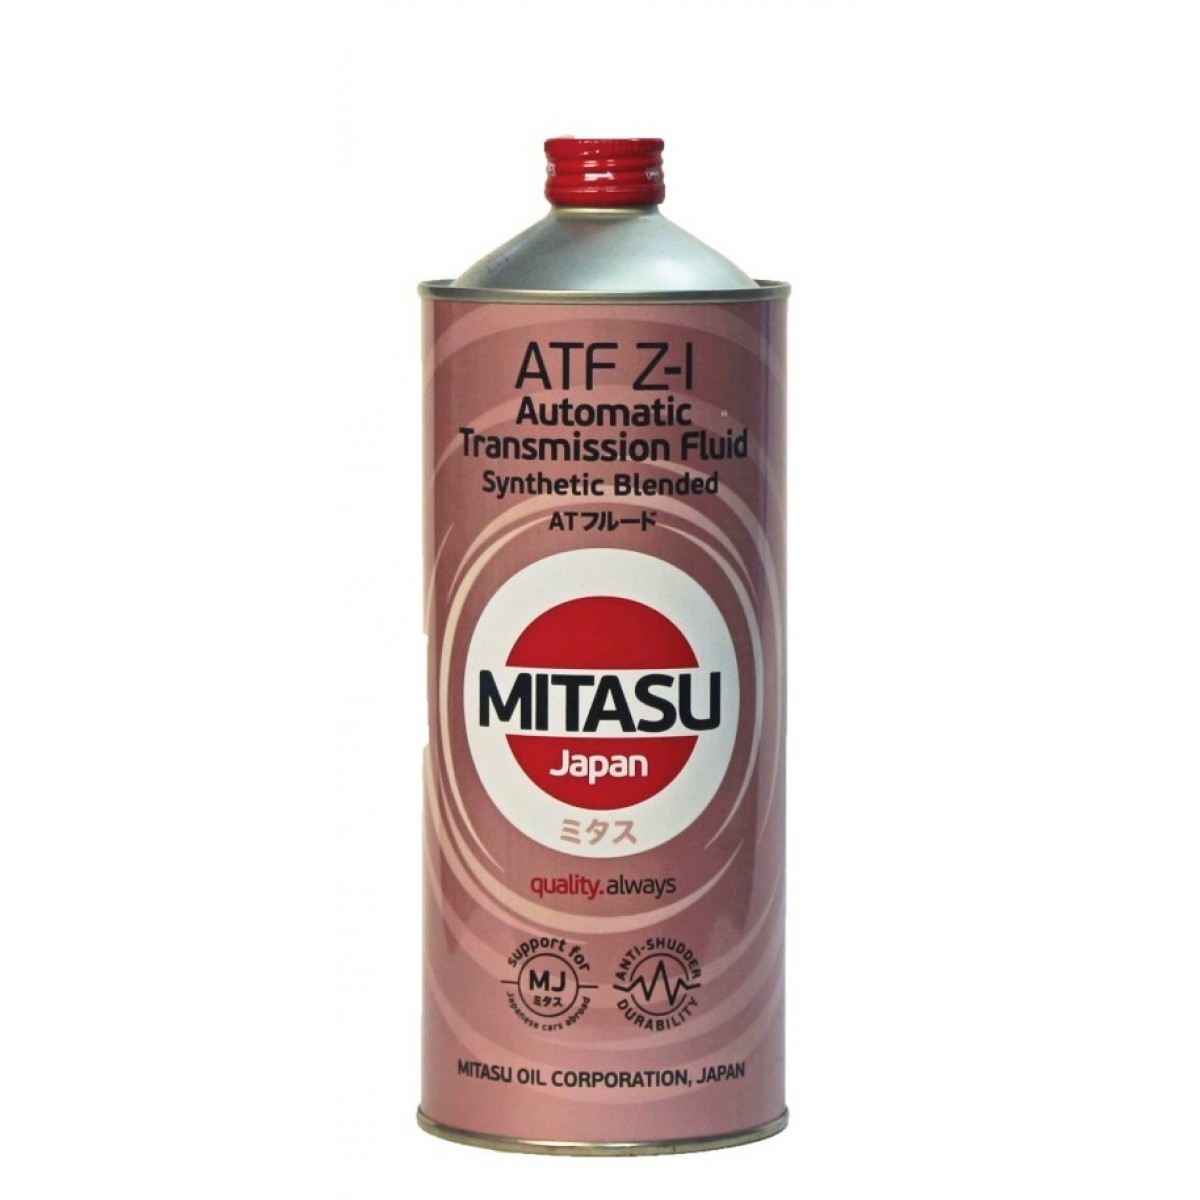 Atf z. Mitasu ATF z1. Mitasu Premium Multi vehicle ATF для АКПП синт 1. Mitasu 1л. MJ-120-1.